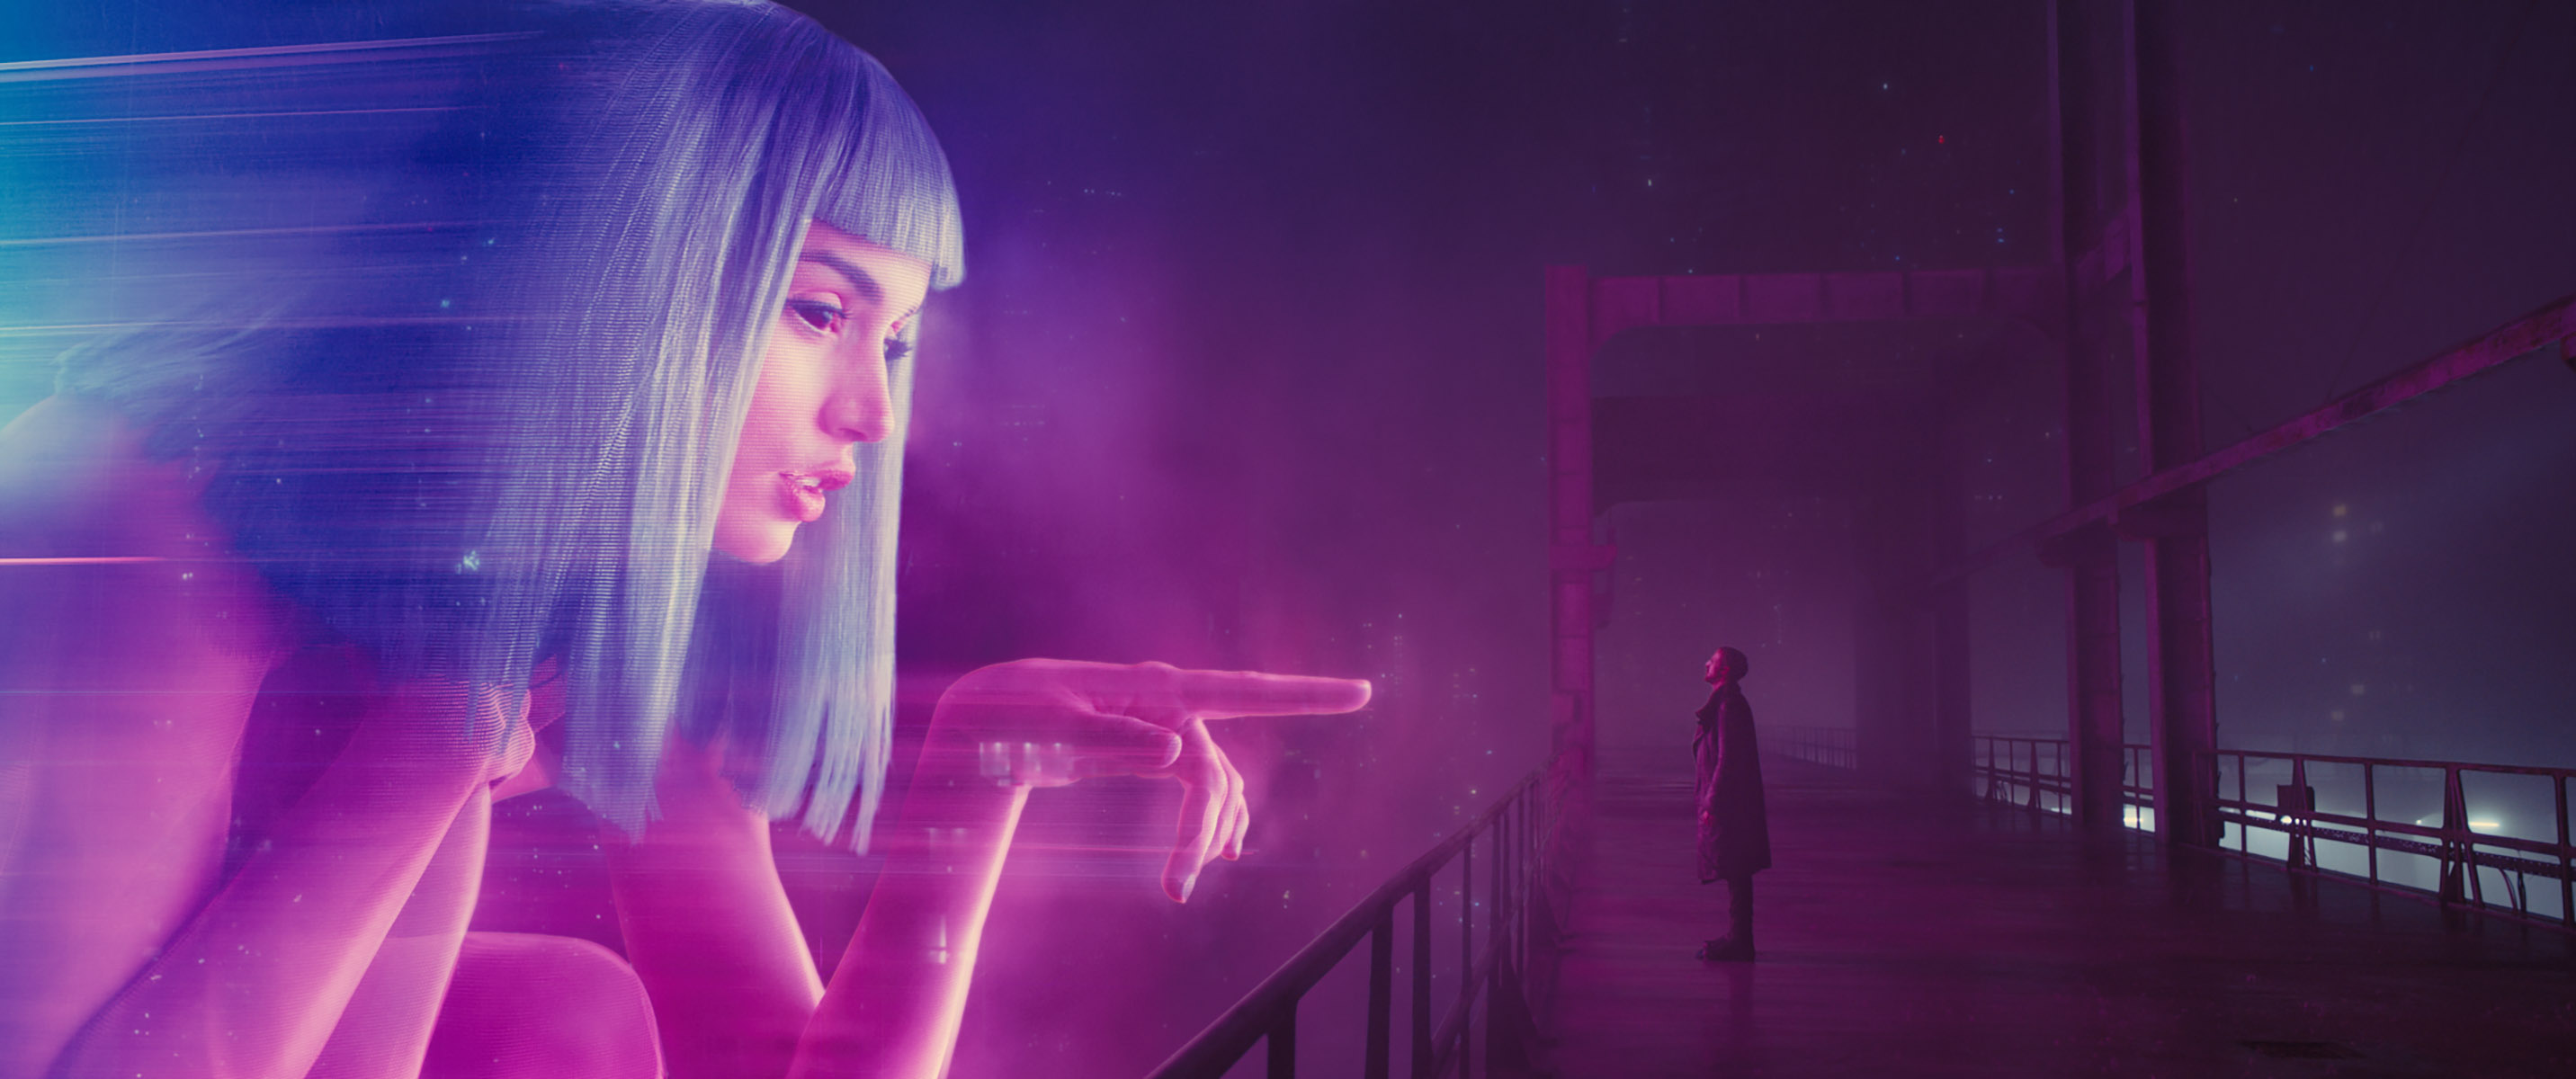 Blade Runner 2049 Officer K Hologram Bridge Blue Hair Finger Pointing Neon Glow Coats Futuristic Cyb 2864x1200